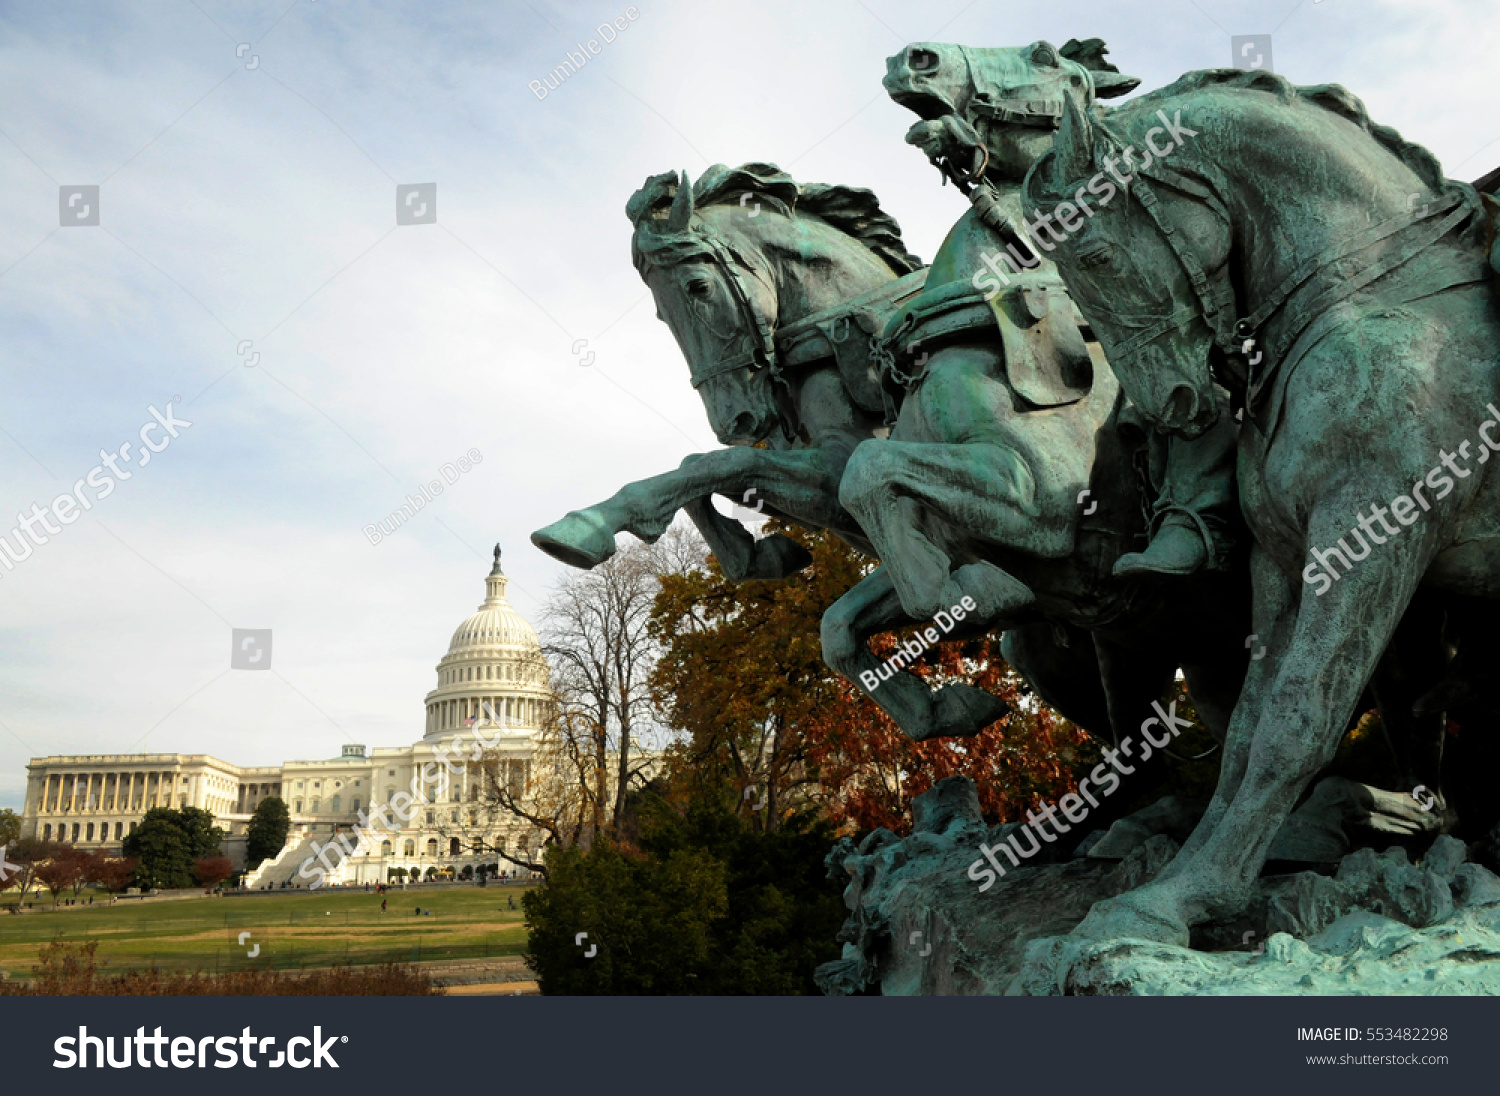  Civil War Memorial Statue in front o the US Capitol Building, Washington, DC. Horses  #553482298